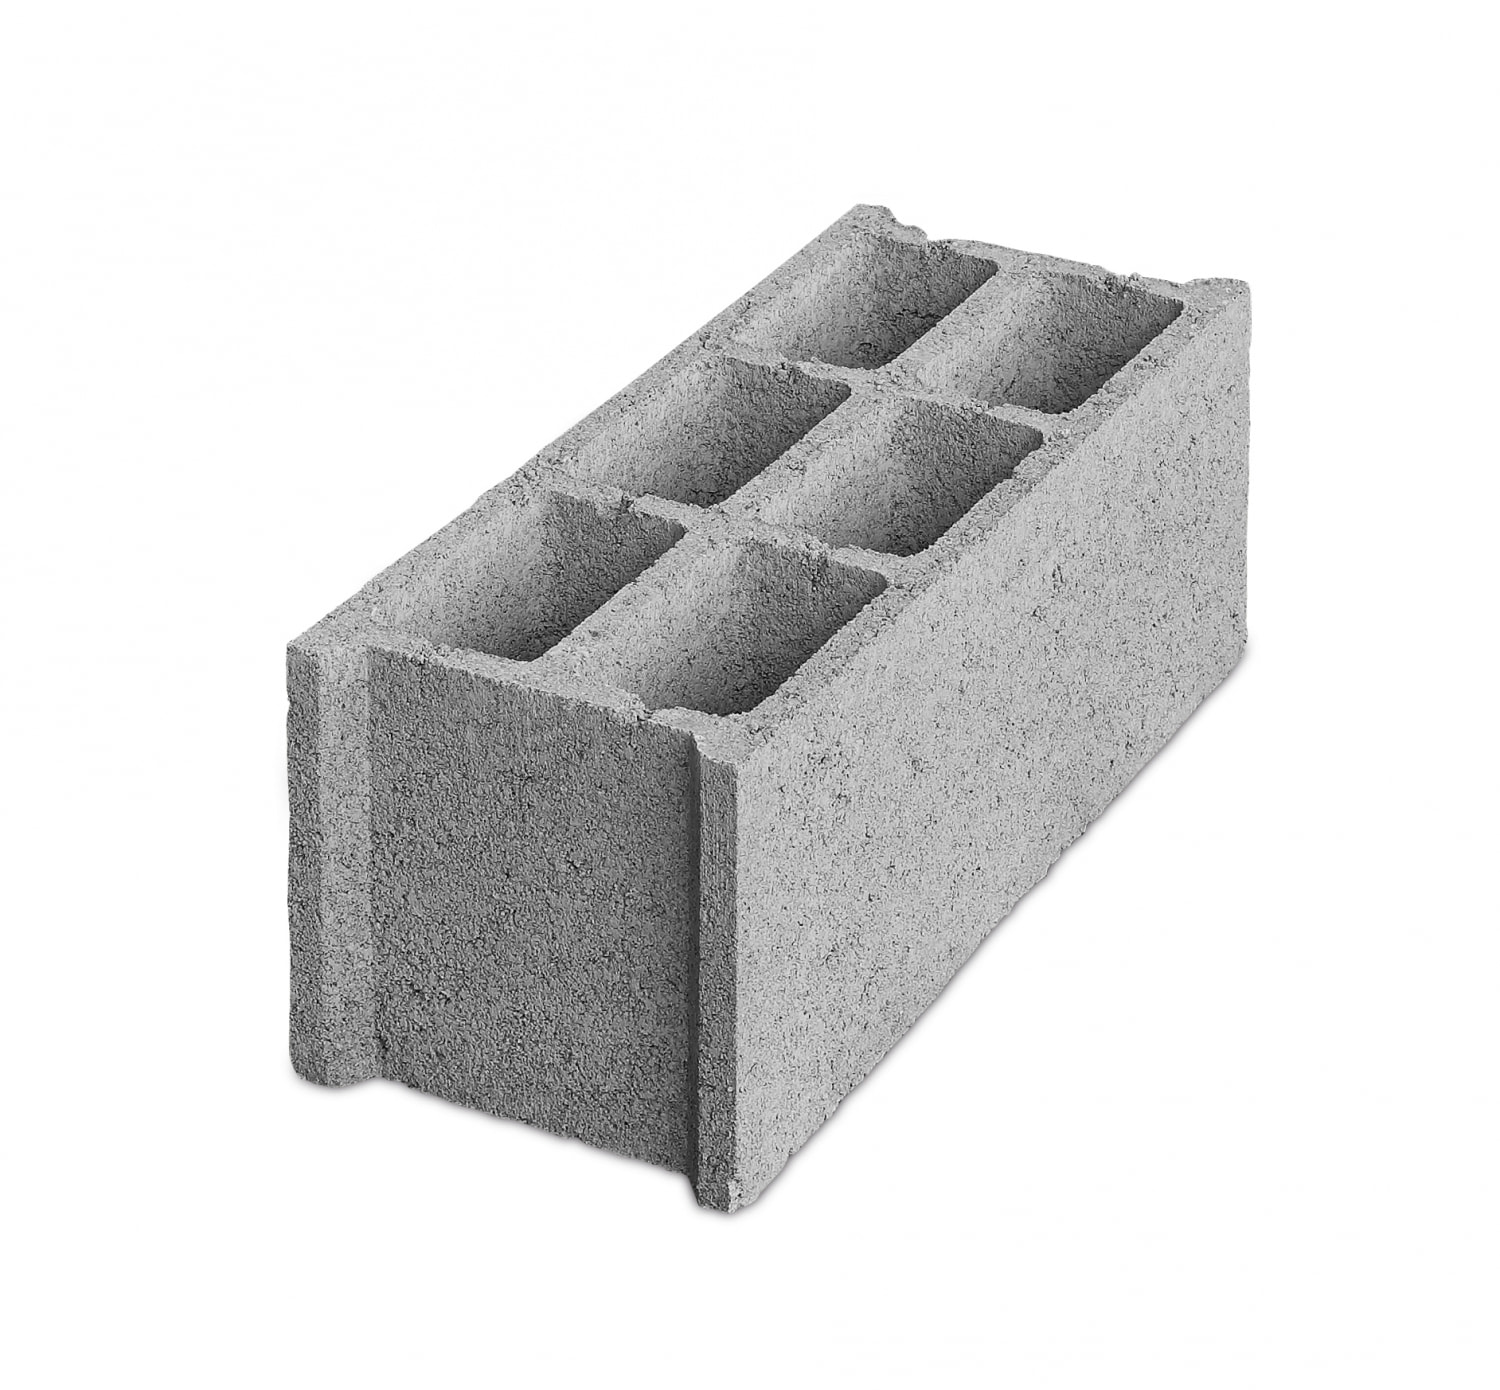 Masonry Blocks